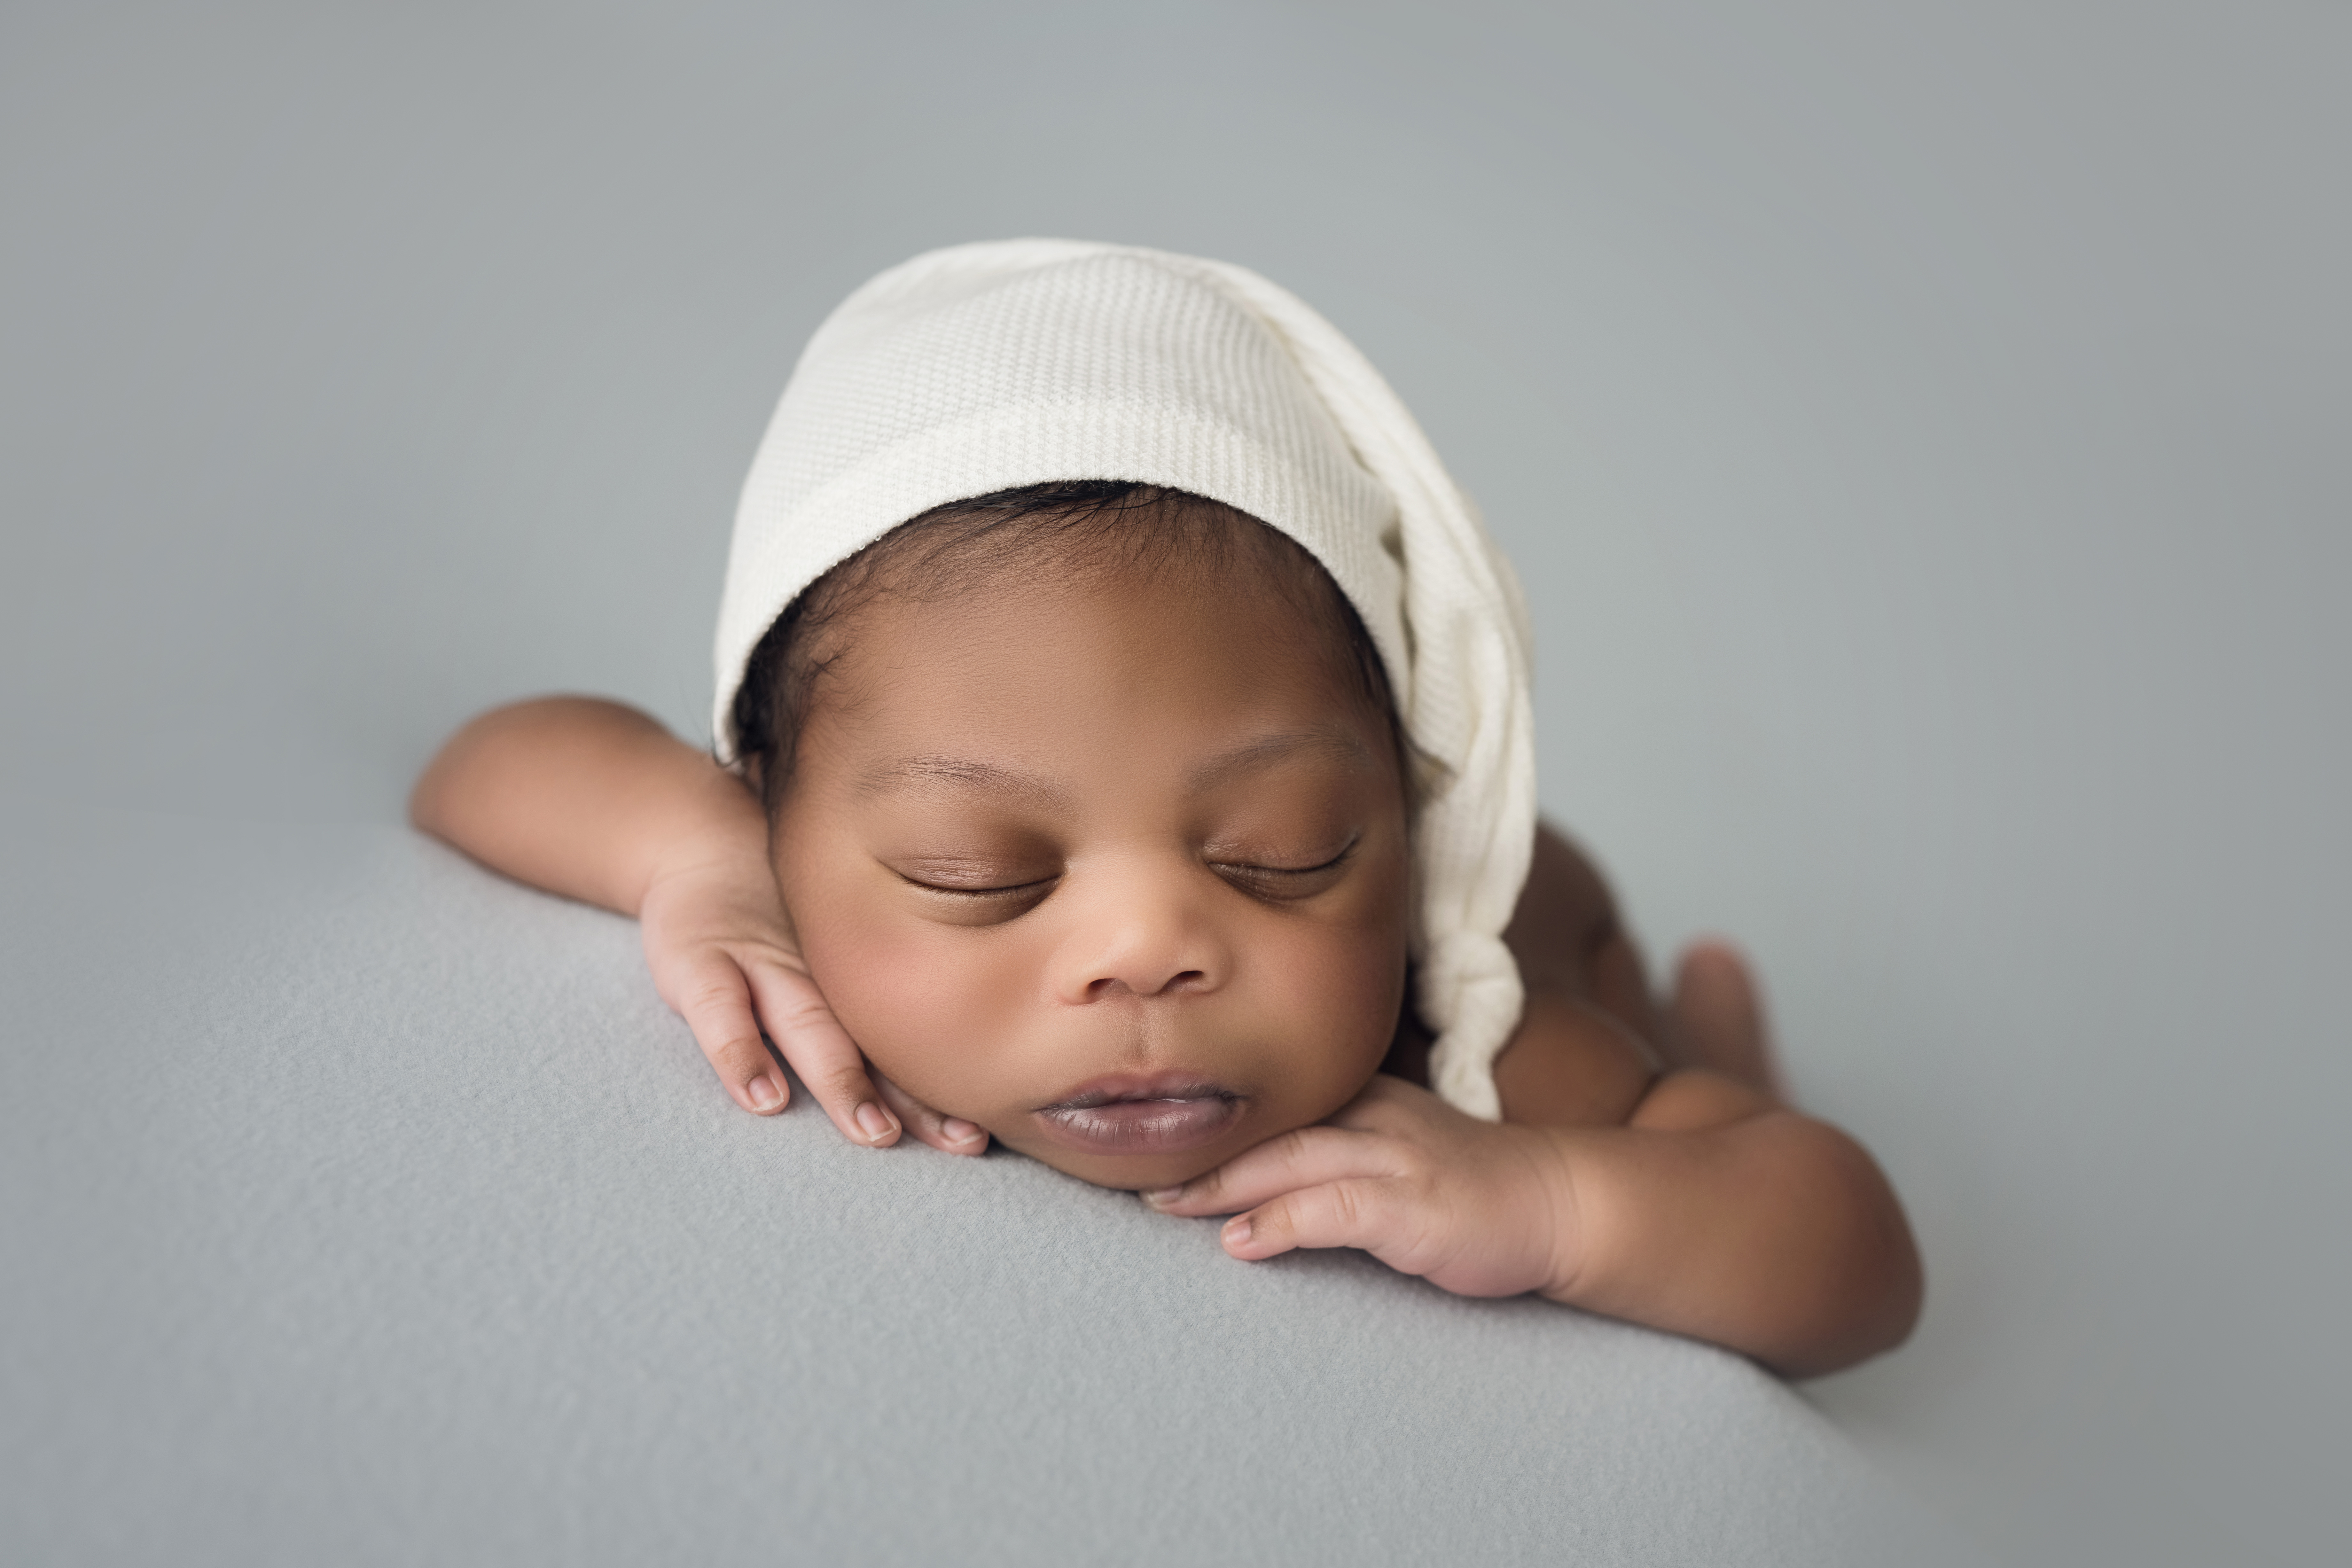 newborn baby boy face forward with white sleepy cap